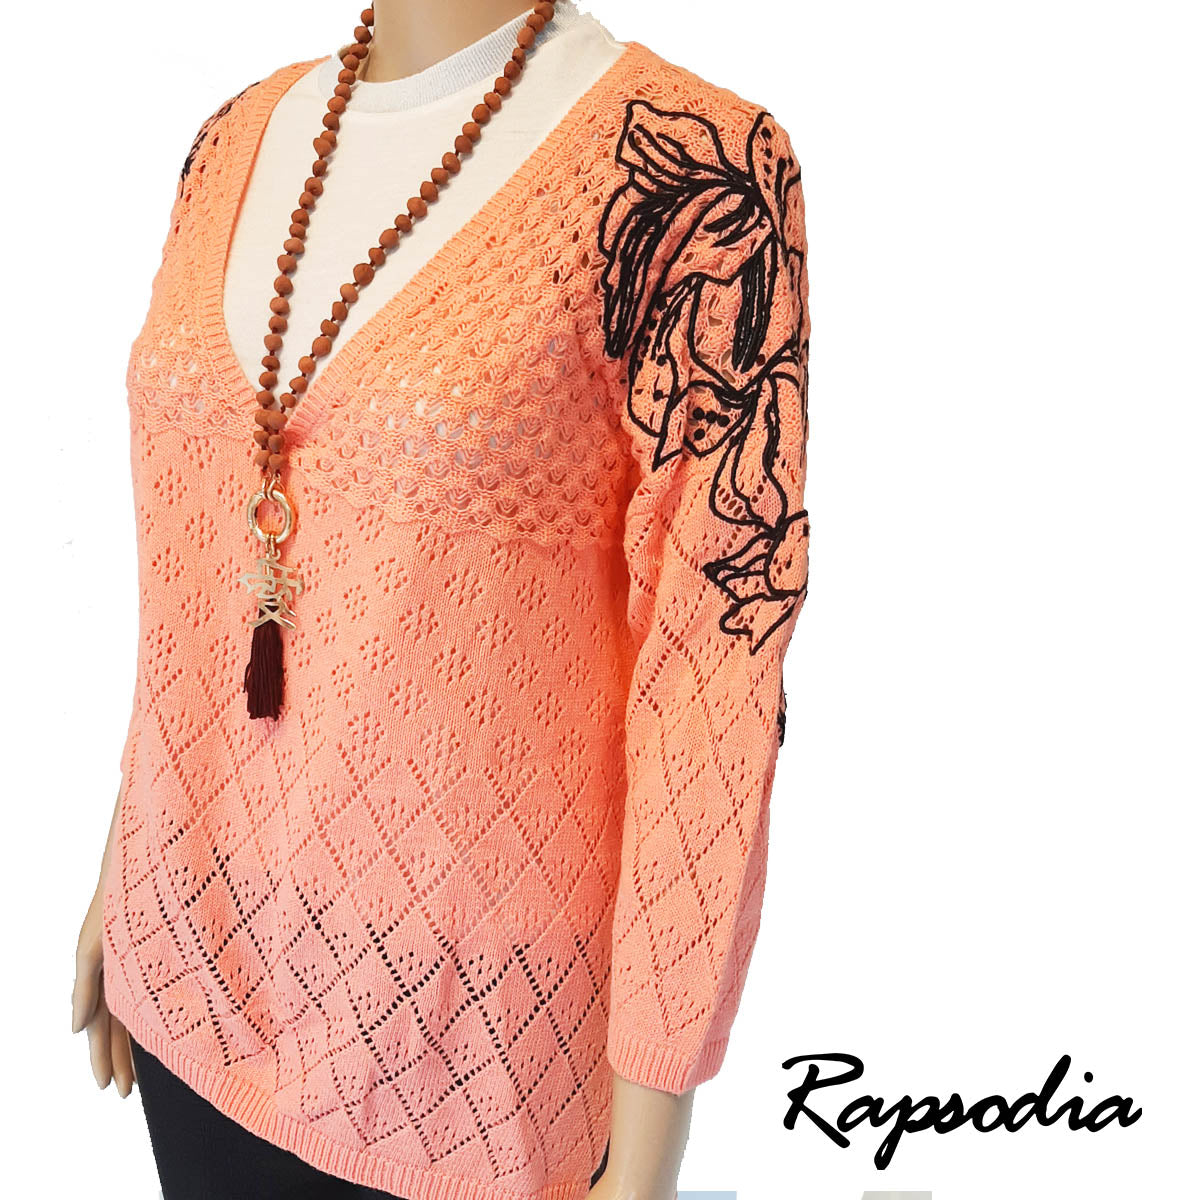 Sweater Rapsodia East Village Rosa